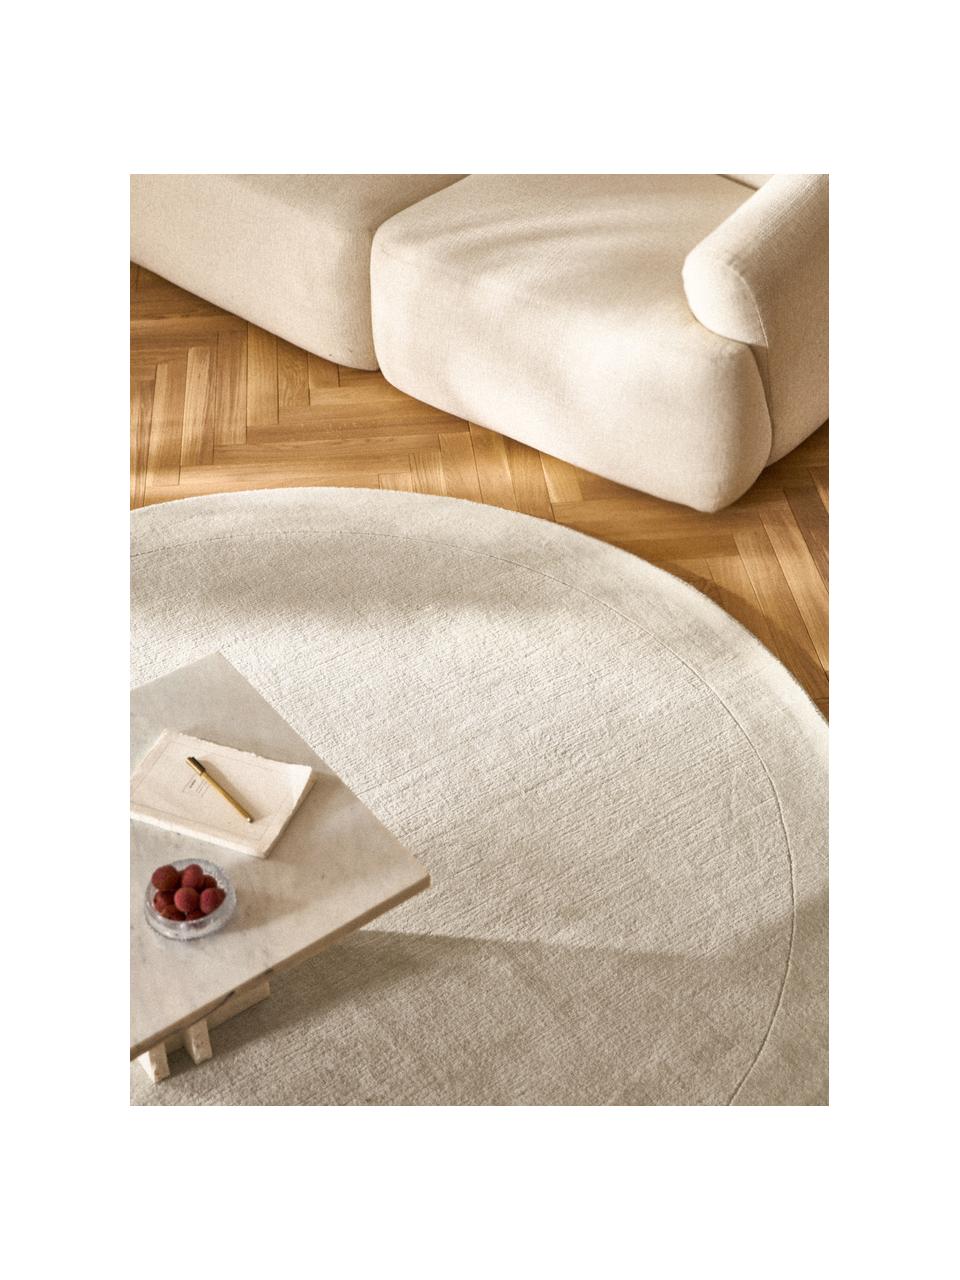 Tapis rond à poils ras Kari, 100 % polyester, certifié GRS, Blanc crème, Ø 150 cm (taille M)